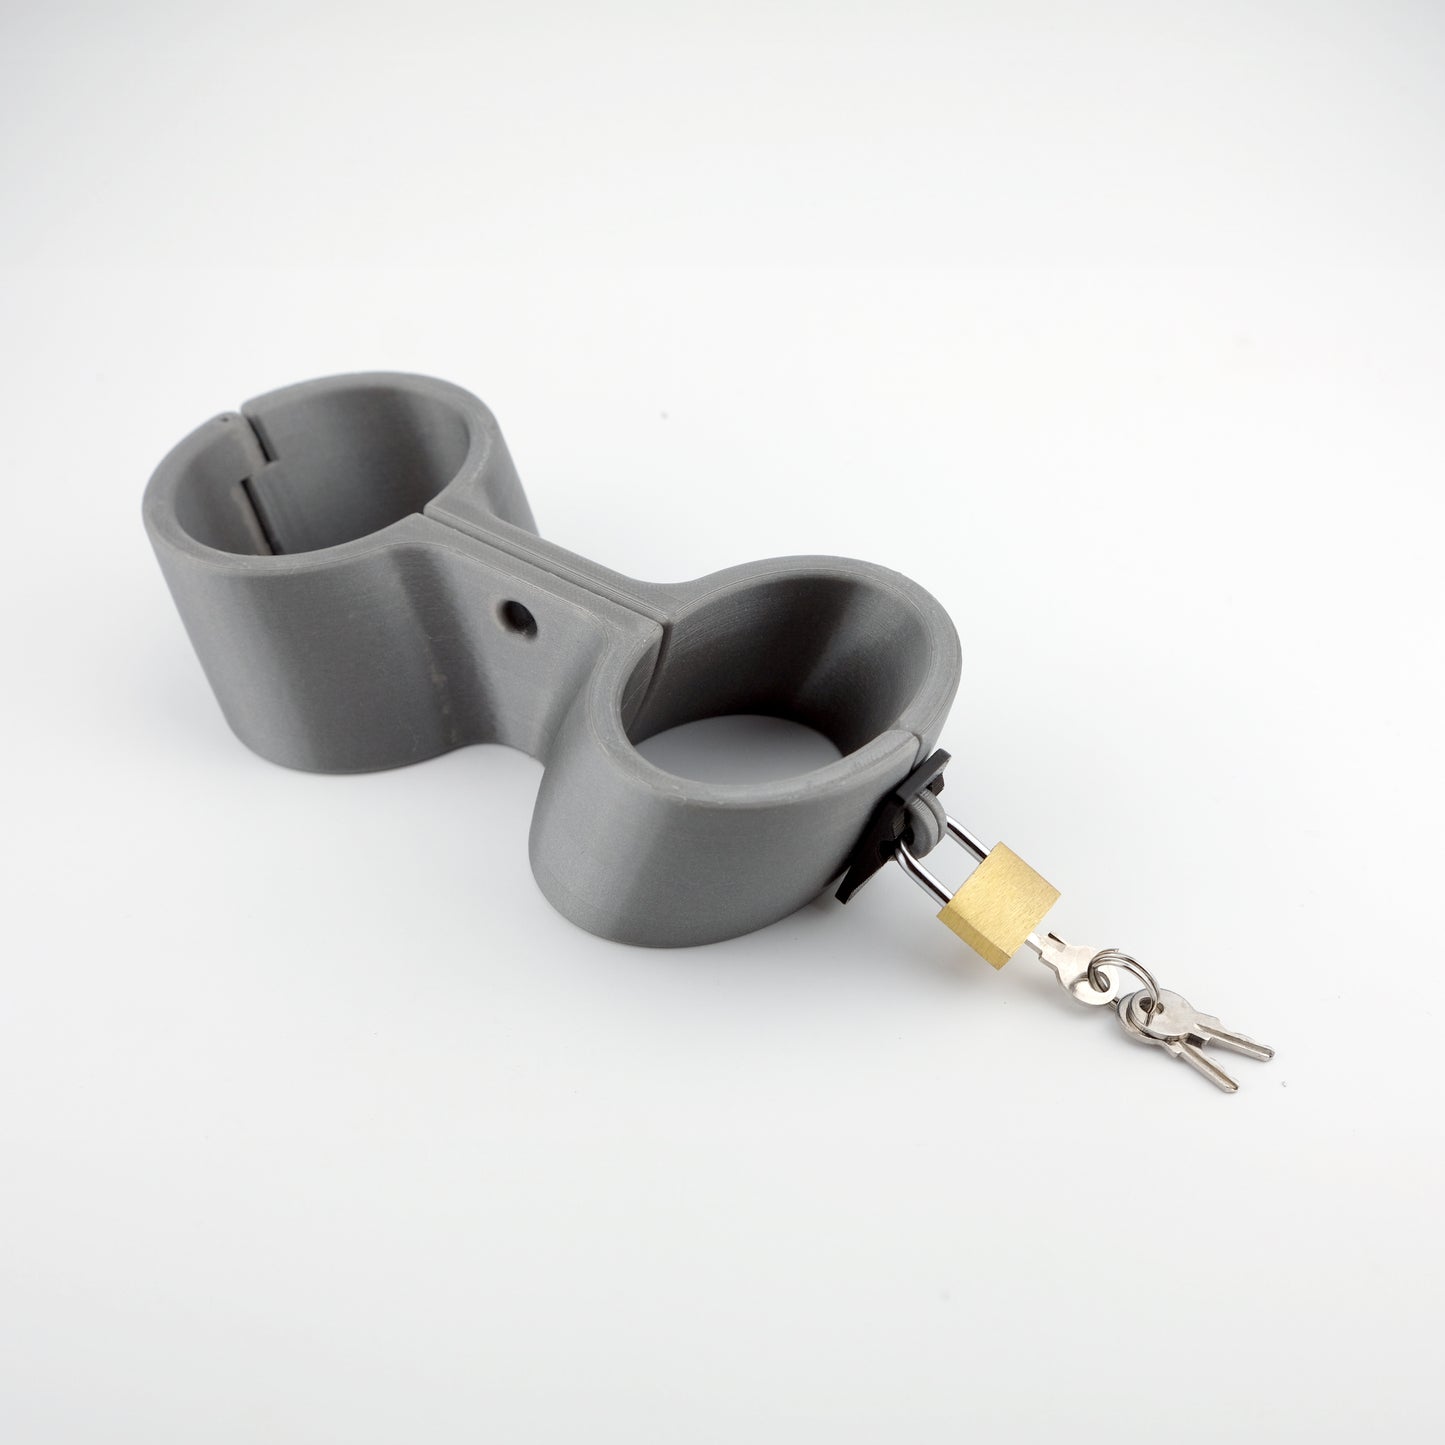 Octocuffs - custom restraining handcuffs